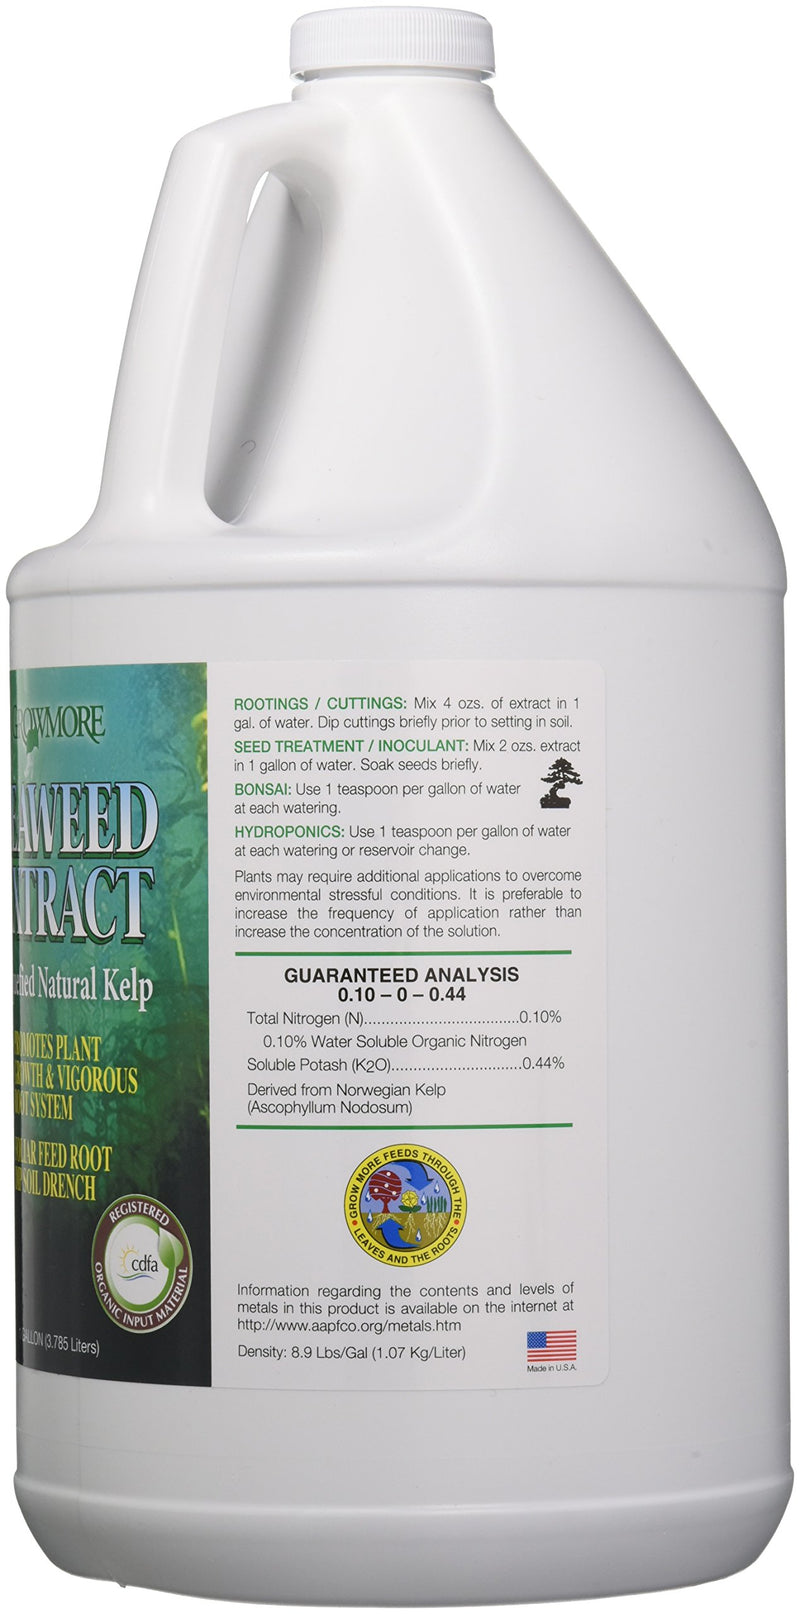 Grow More 6041 Seaweed Extract 11% Organic, 1 Gallon, 1-Gallon, white